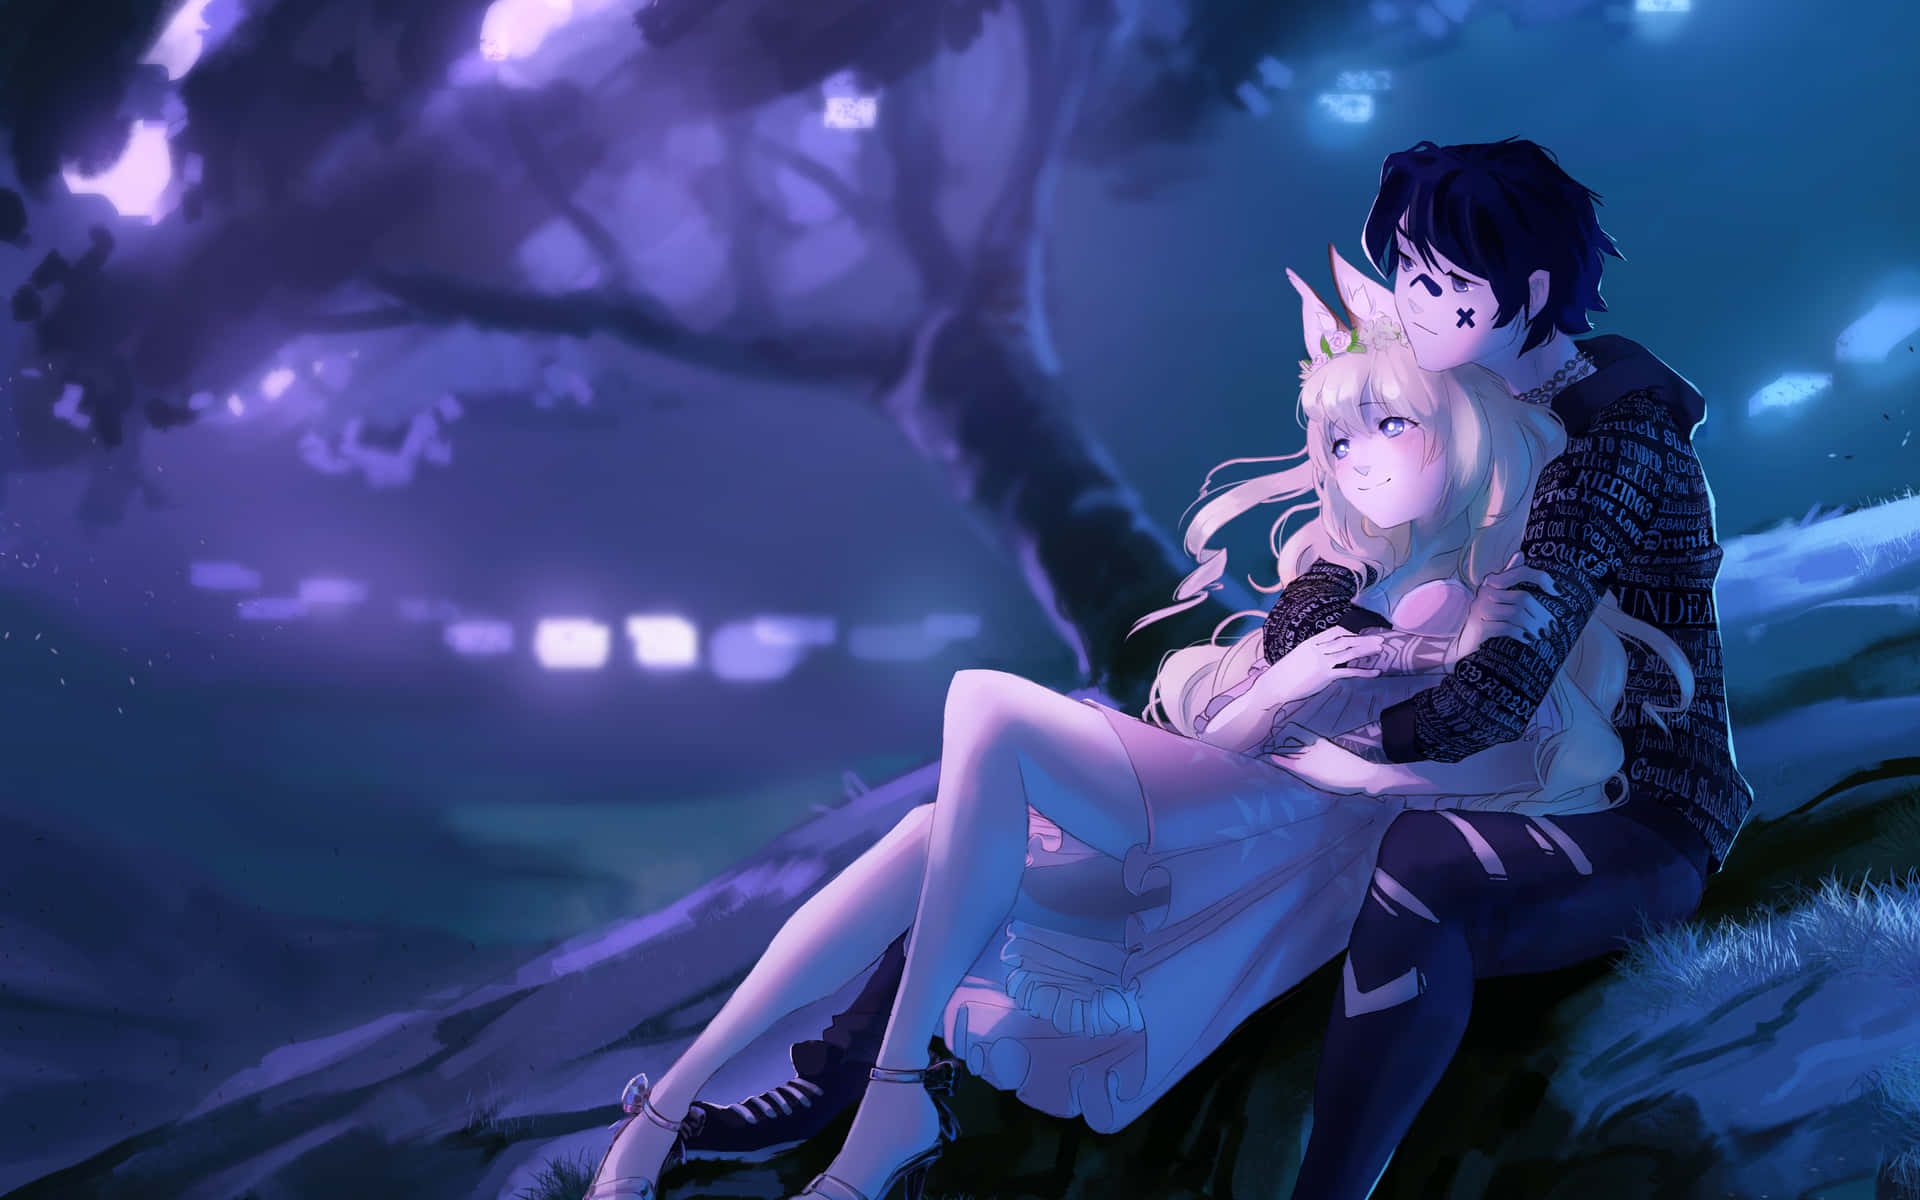 An Adorable Anime Couple Enjoying a Happy Moment